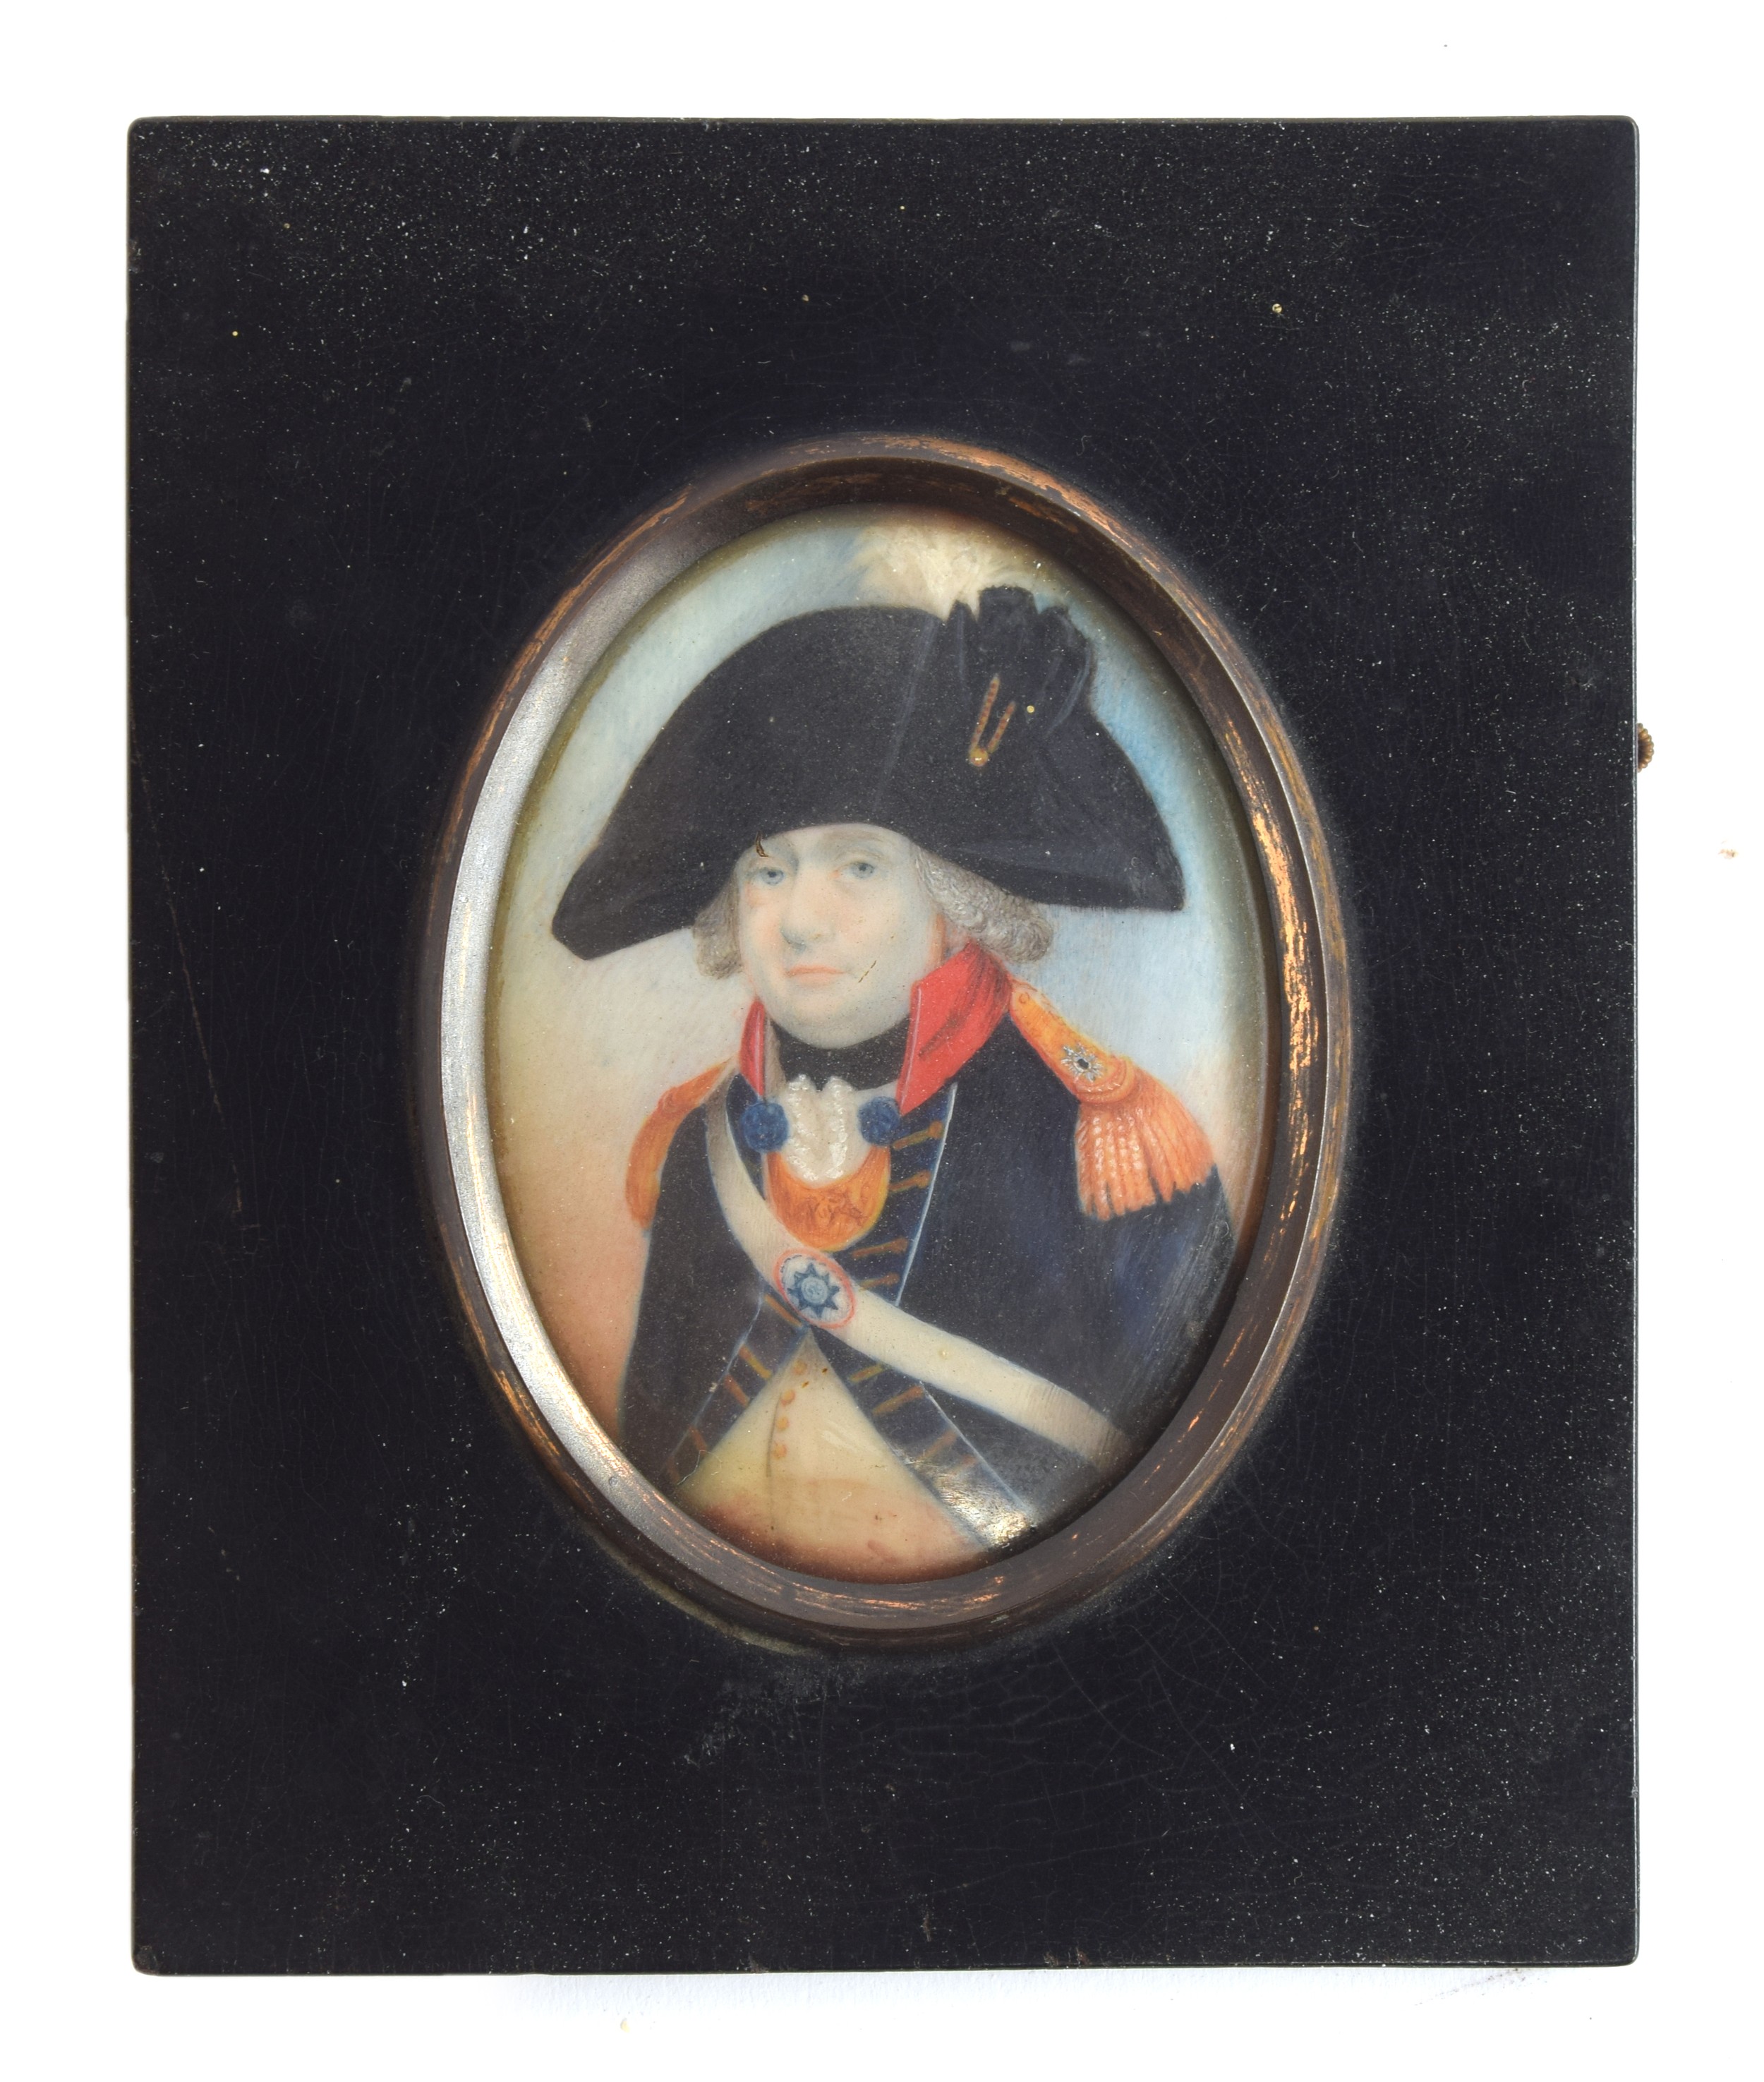 A late 18th century portrait miniature of James Gunter, 'Born 1755, Obit 1801', painted by J.